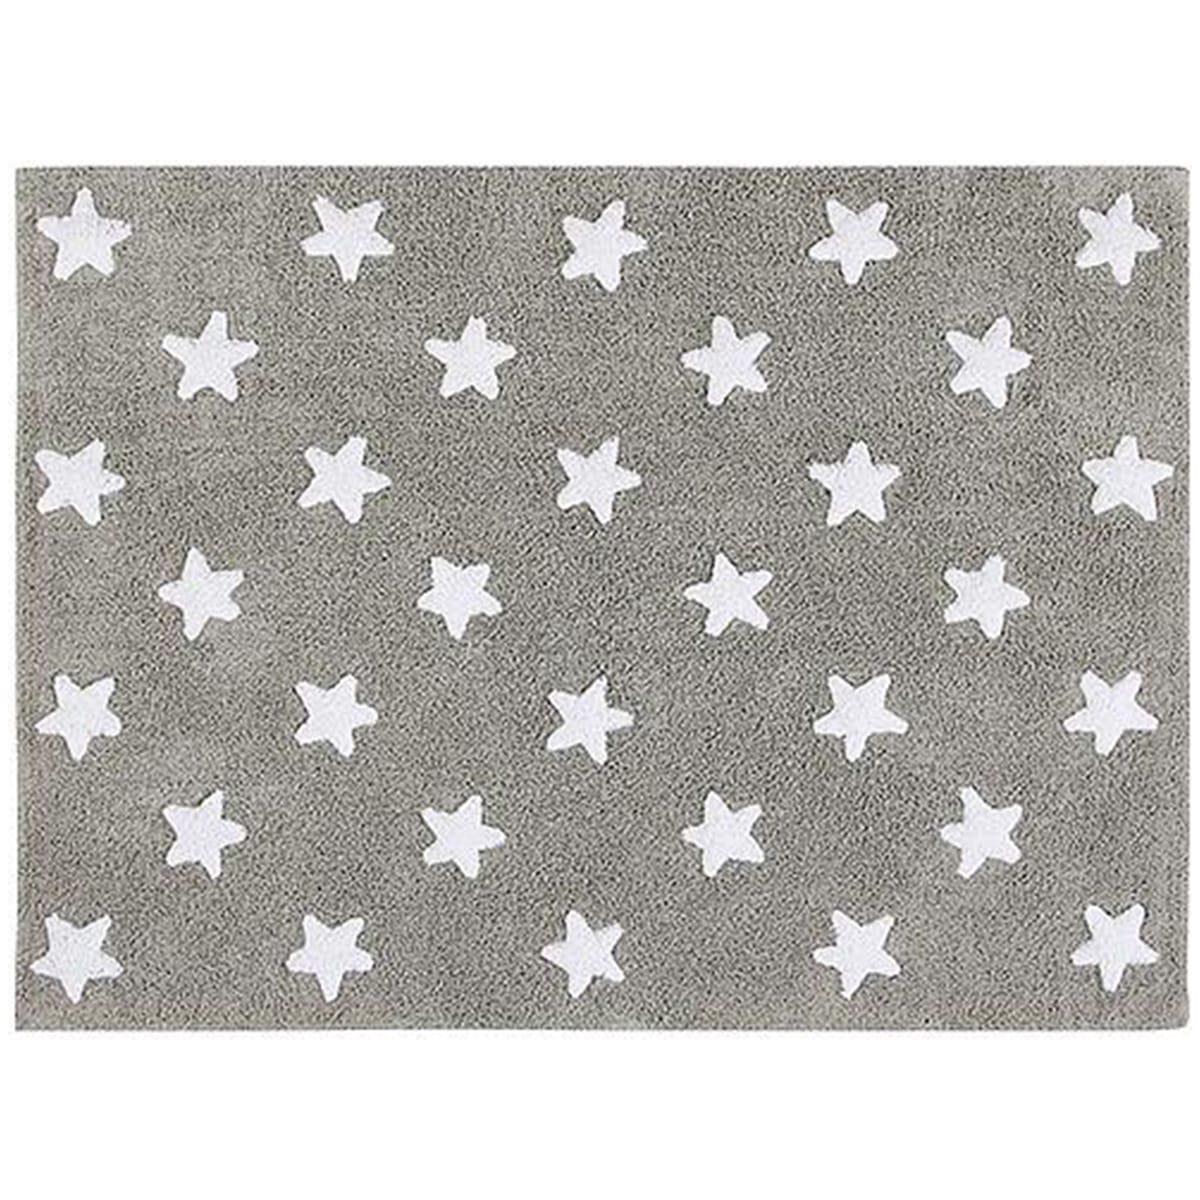 Tapis coton gris motif étoile 120x160